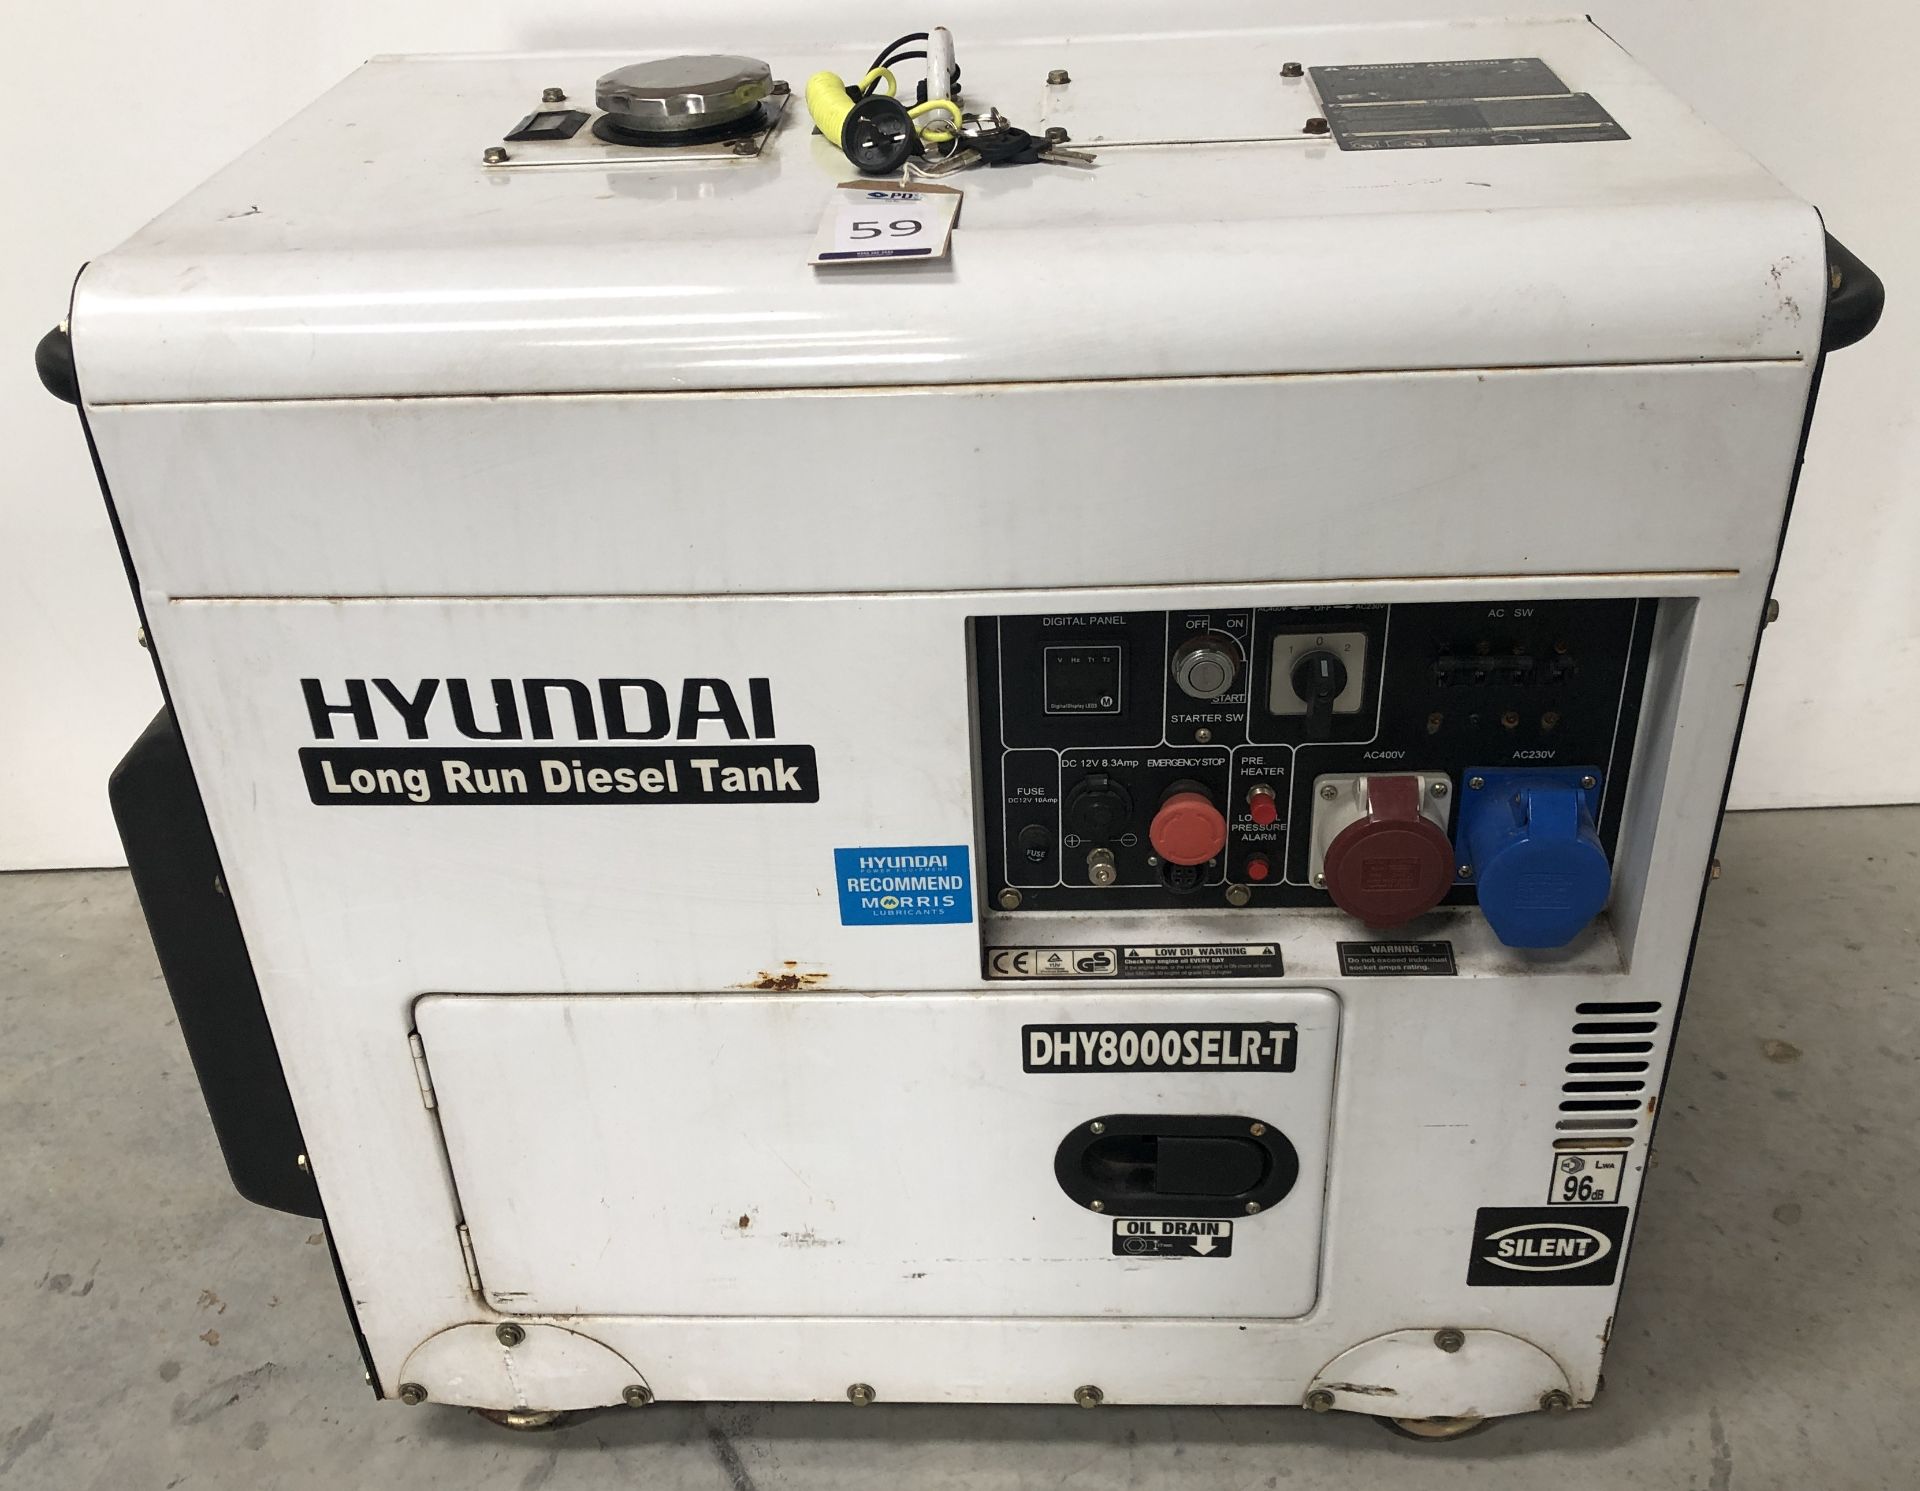 Hyundai DHY6000SELR Diesel Generator (2016), Serial Number 201605 4.5/5.2kw (Location: Brentwood.